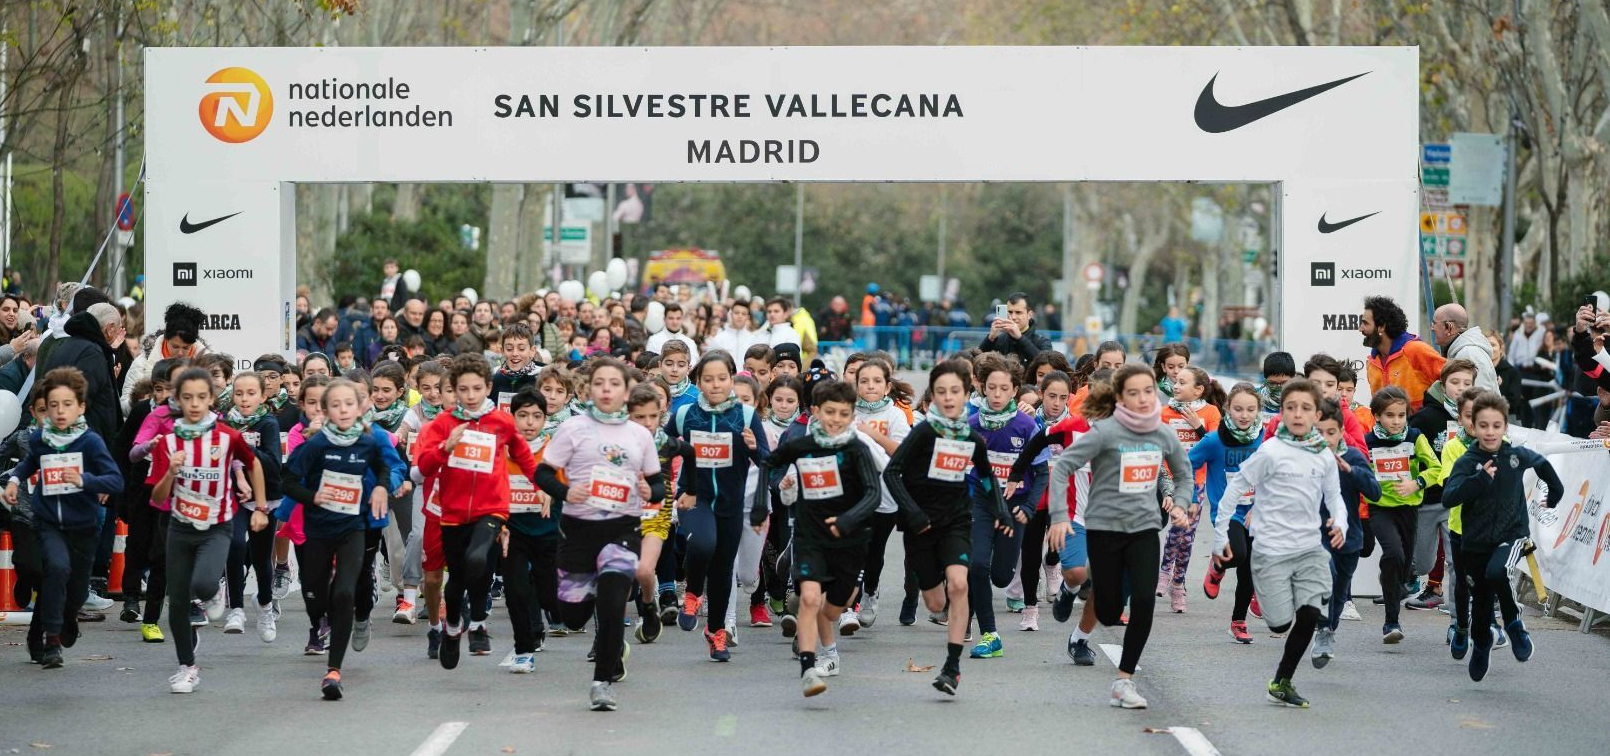 San Silvestre Vallecana 2023 Live, Schedule & TV Details Info